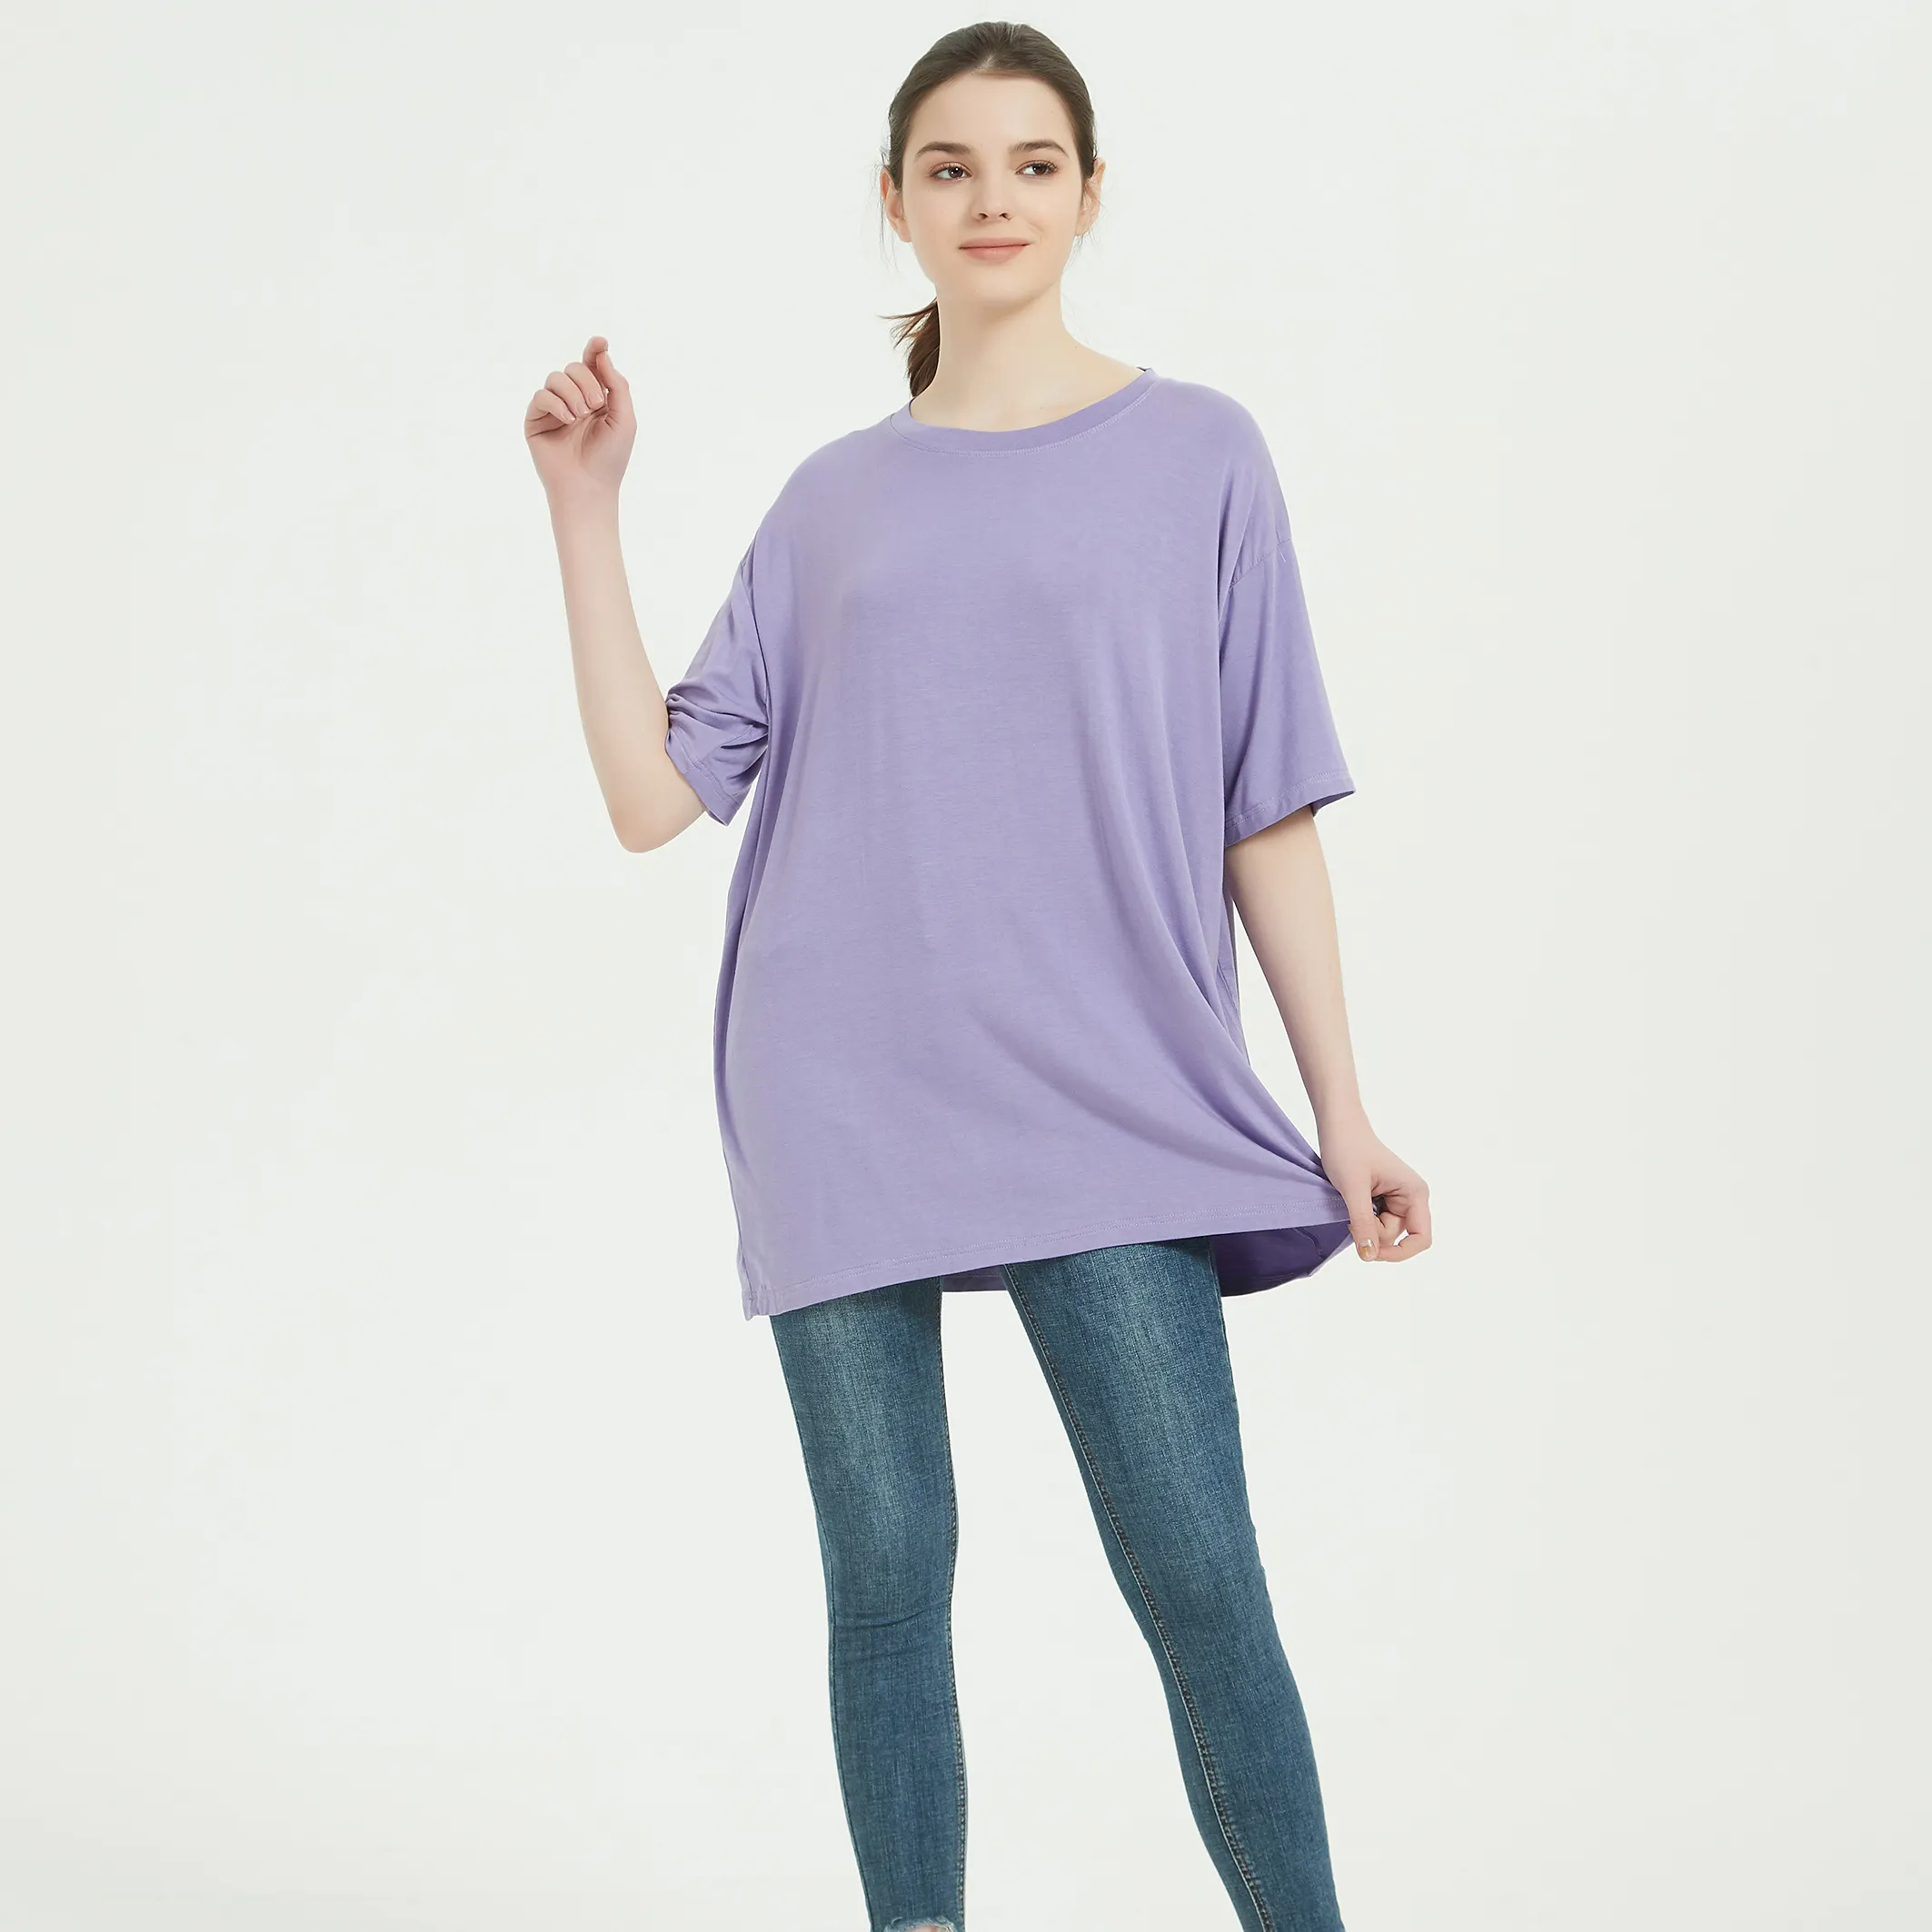 China Manufacturer Custom Clothing Blank Cotton Purple Tshirt Plain Plus Size Women's T-shirts